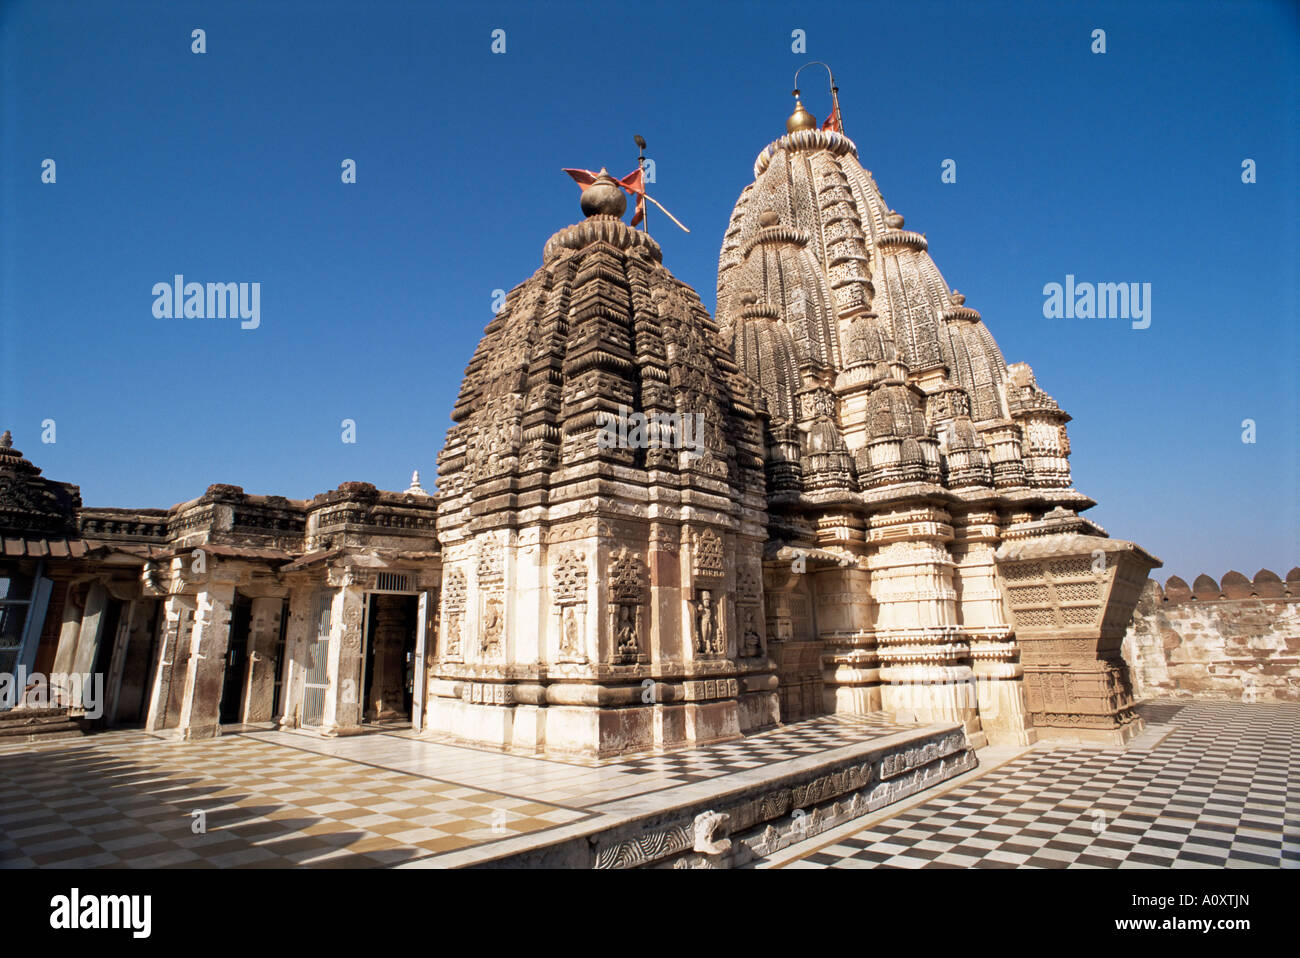 Magnificent Jain temple built in the 10th century dedicated to Mahavira Osiyan Rajasthan state India Asia Stock Photo